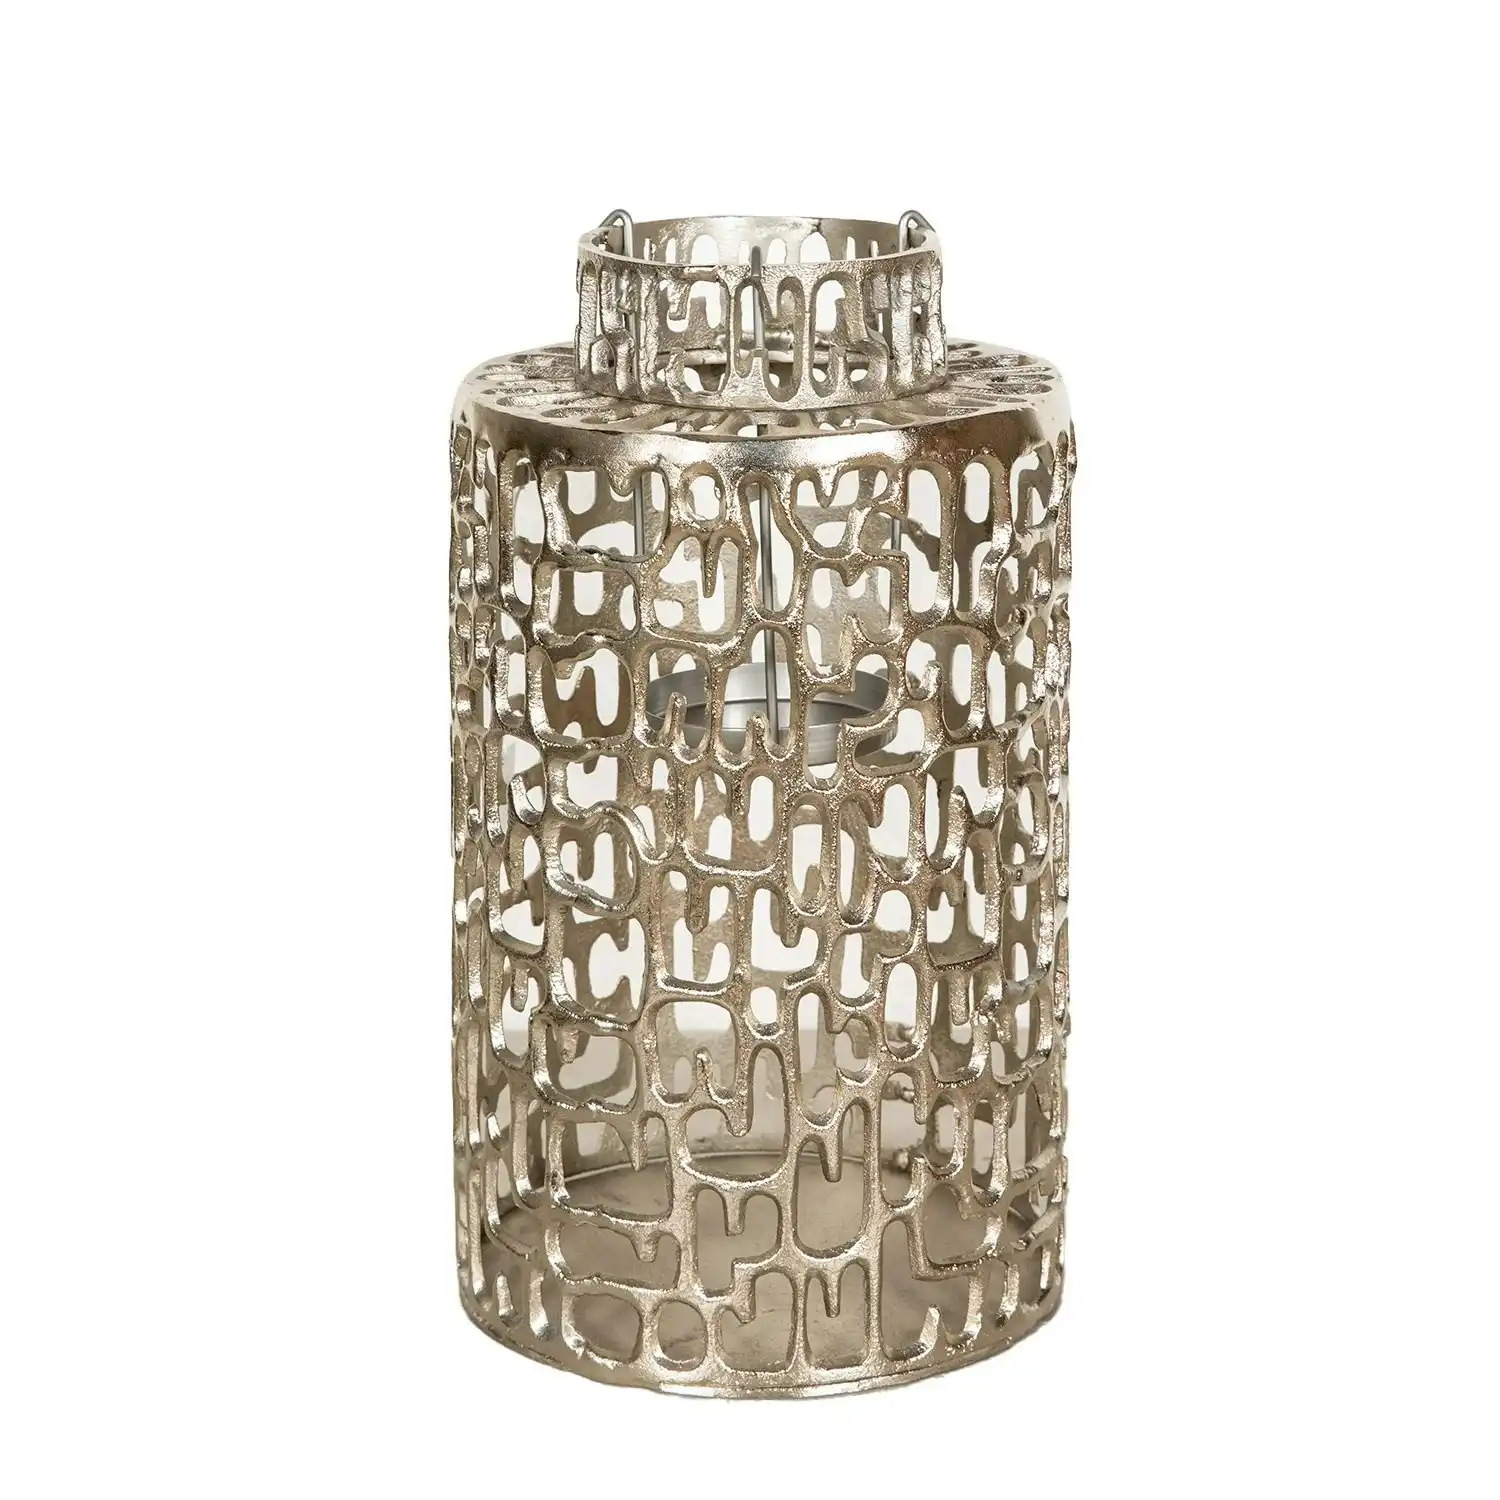 SSH Collection Jali 43cm Tall Lantern/Vase - Antique Brass